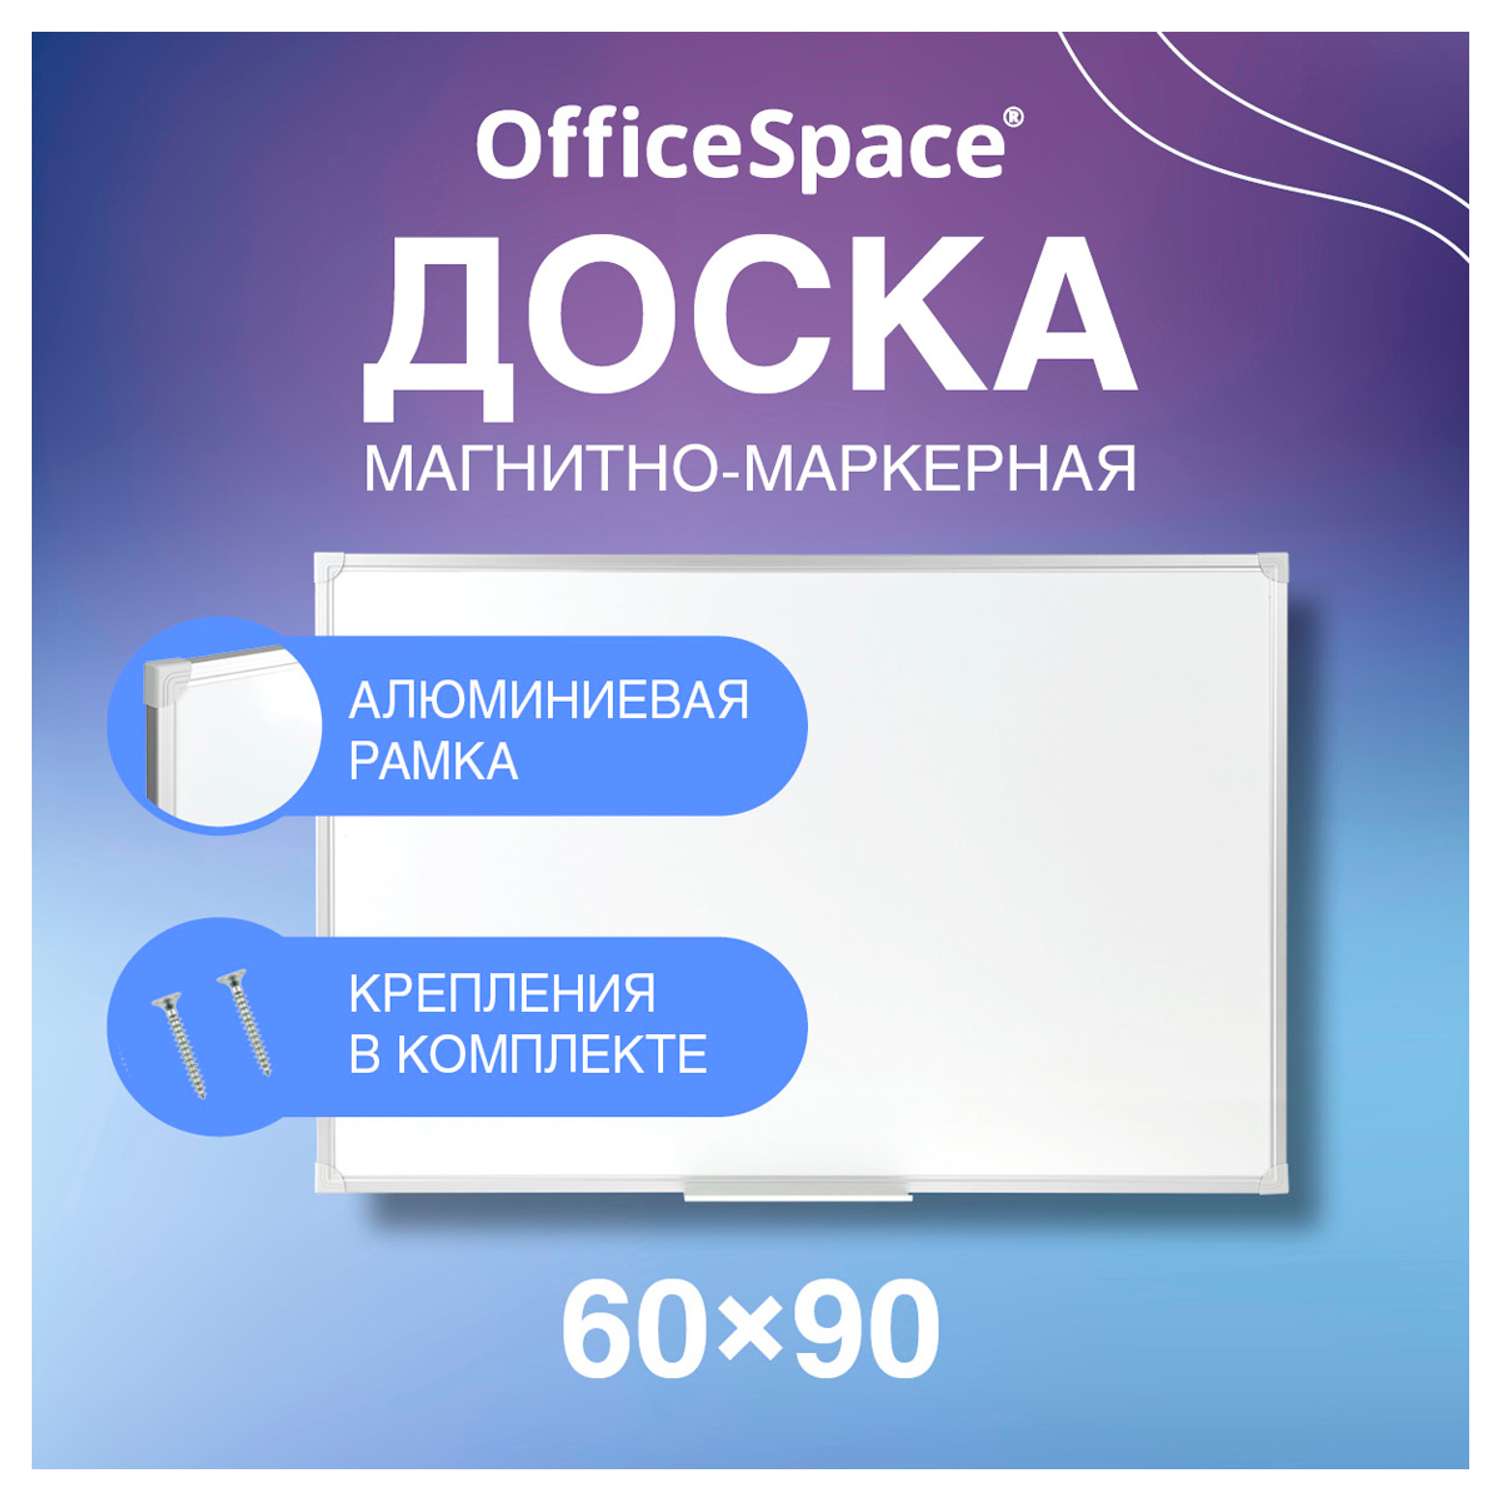 Доска OfficeSpace магнитно-маркерная алюминиевая рамка - фото 2